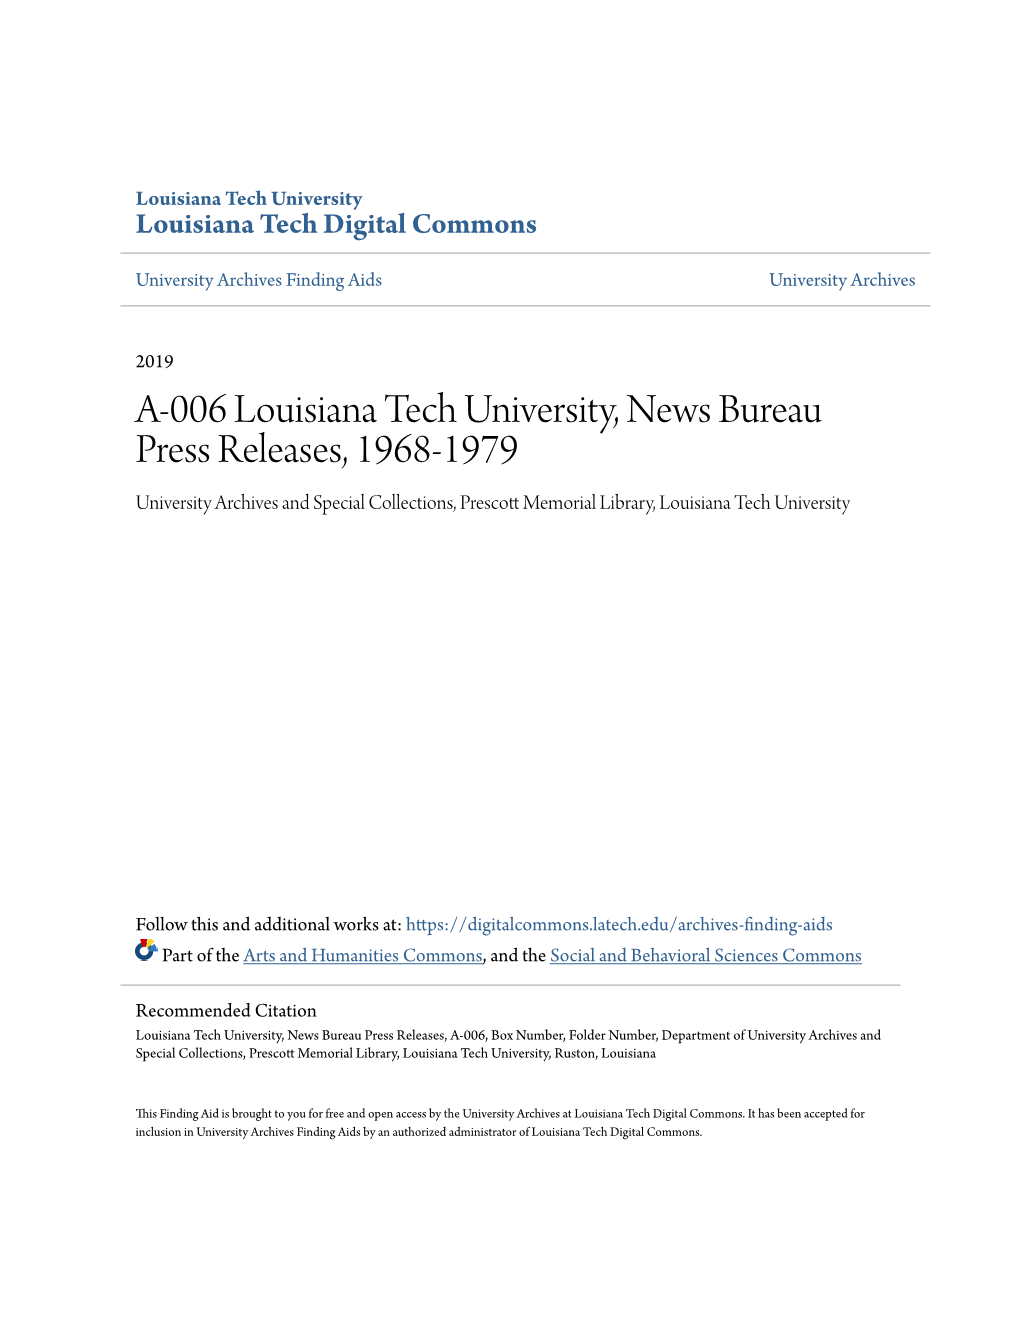 A-006 Louisiana Tech University, News Bureau Press Releases